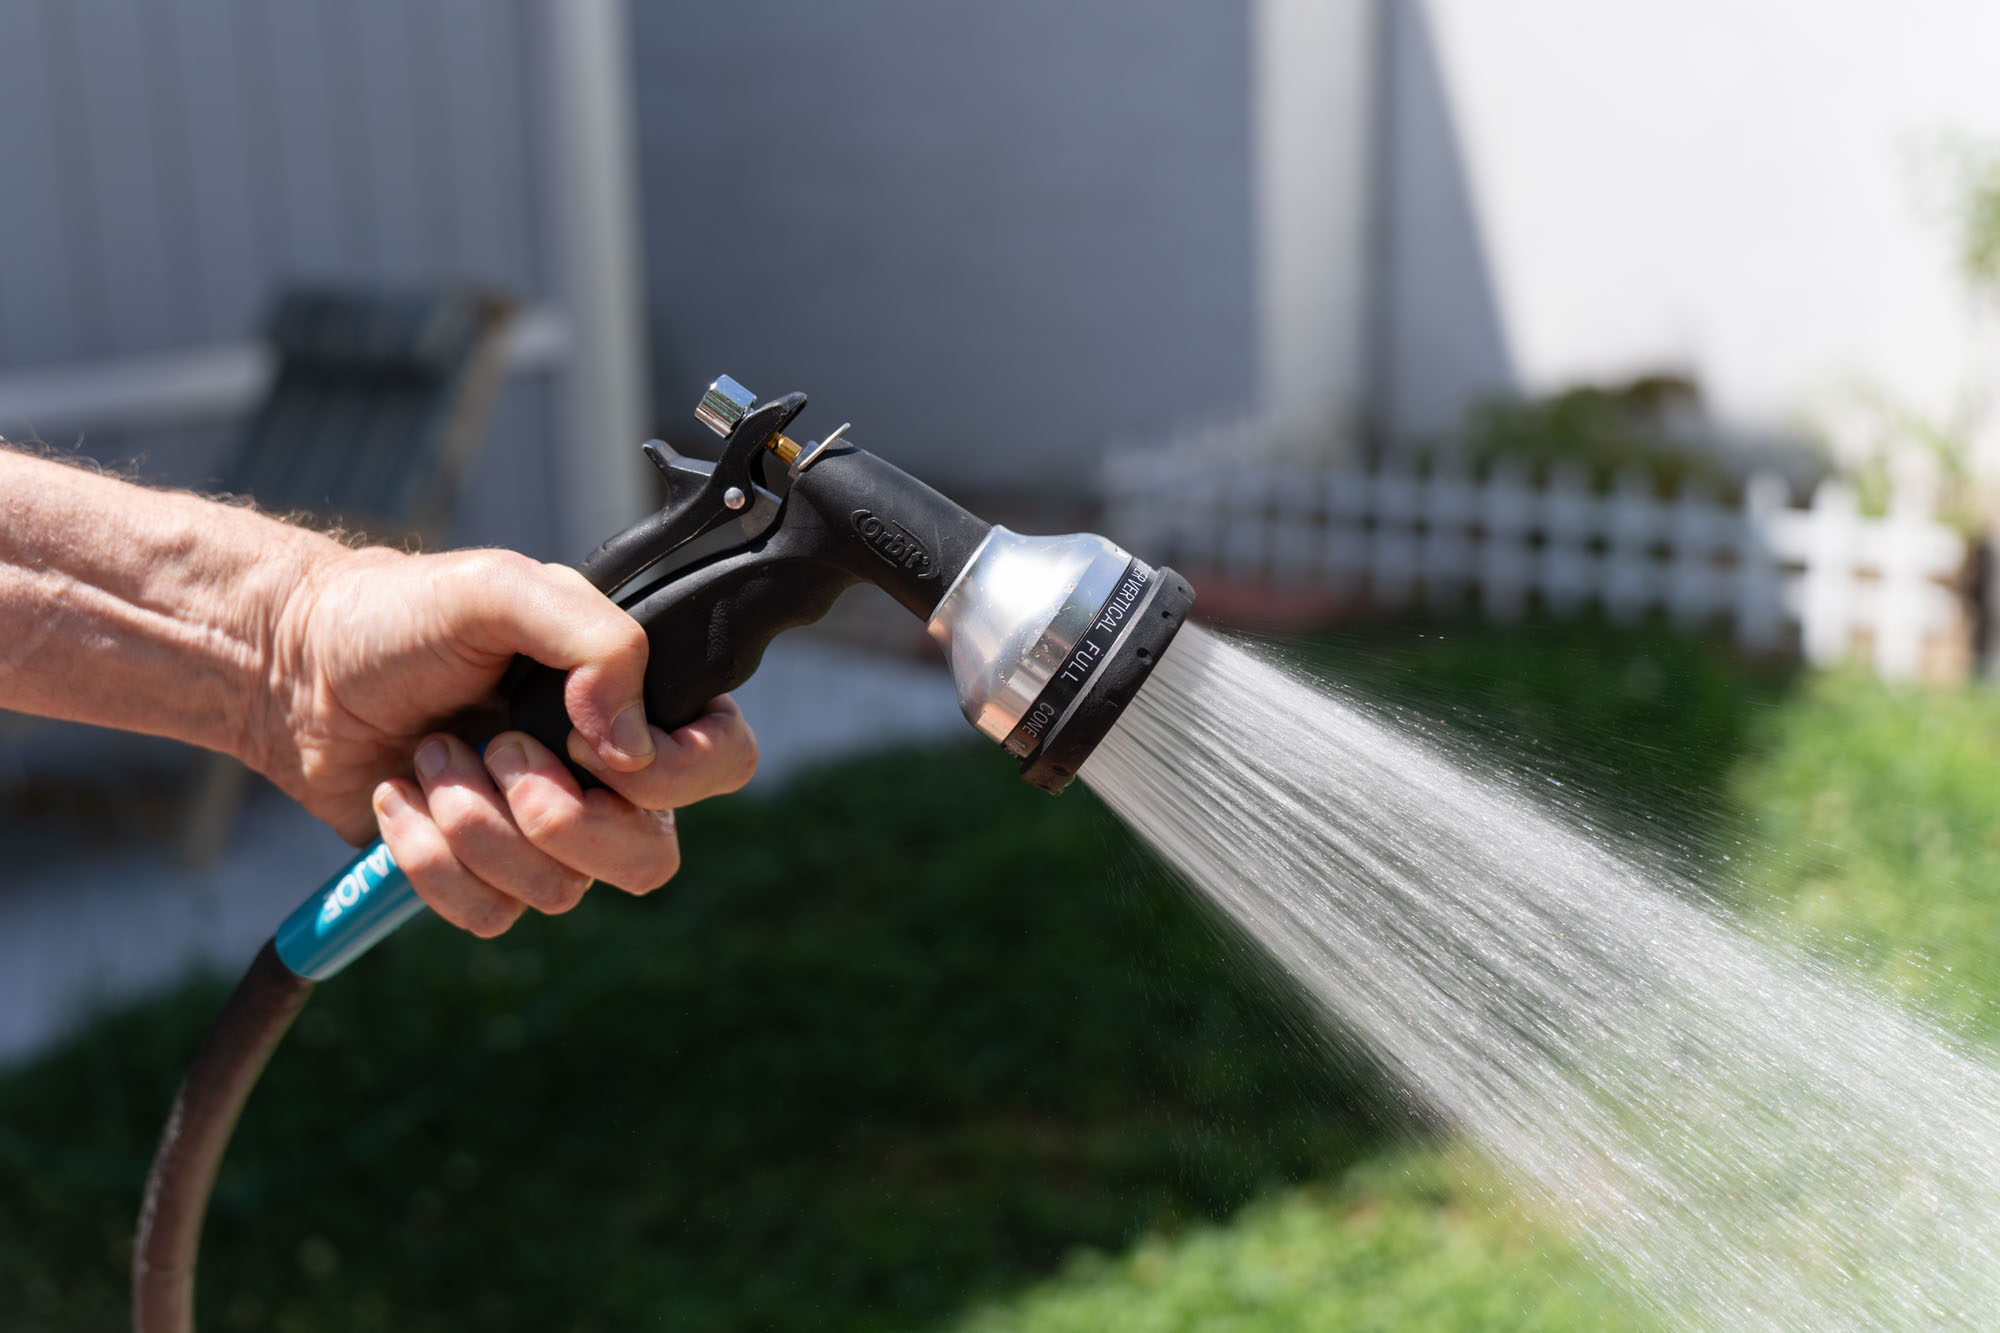 Garden Hose Nozzle, High Pressure Car Wash Sprayer Metal/Plastic Water Hose Nozzle for Outdoor Gardening, Pets Shower, Patio Floor Cleaning (Black)